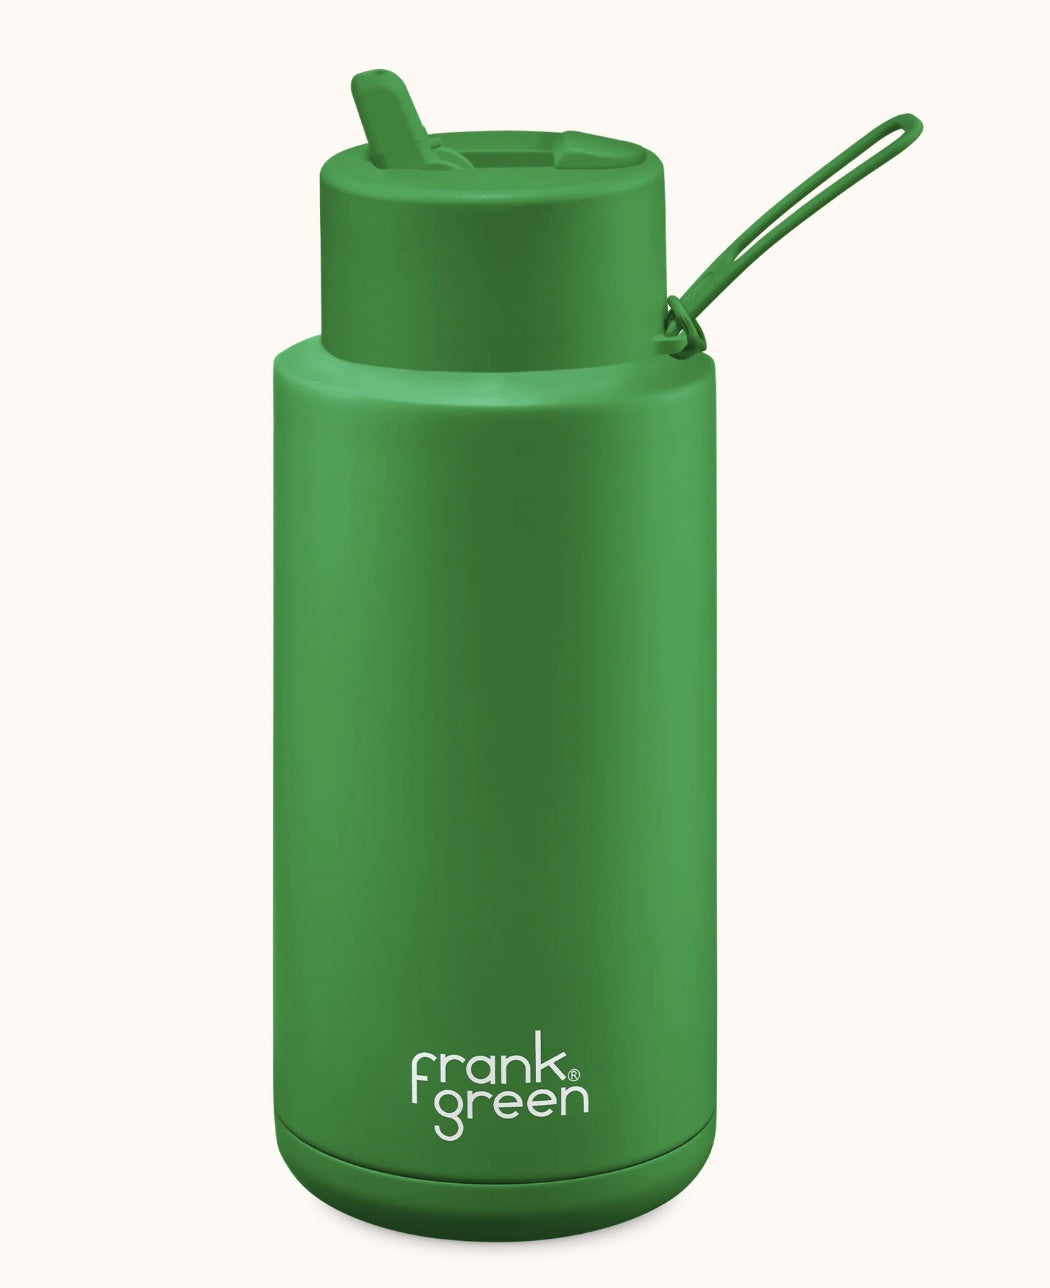 Limited Edition Evergreen 34oz / 1 Ltr Stainless Steer Ceramic Reusable bottle Drink Bottles Frank Green   